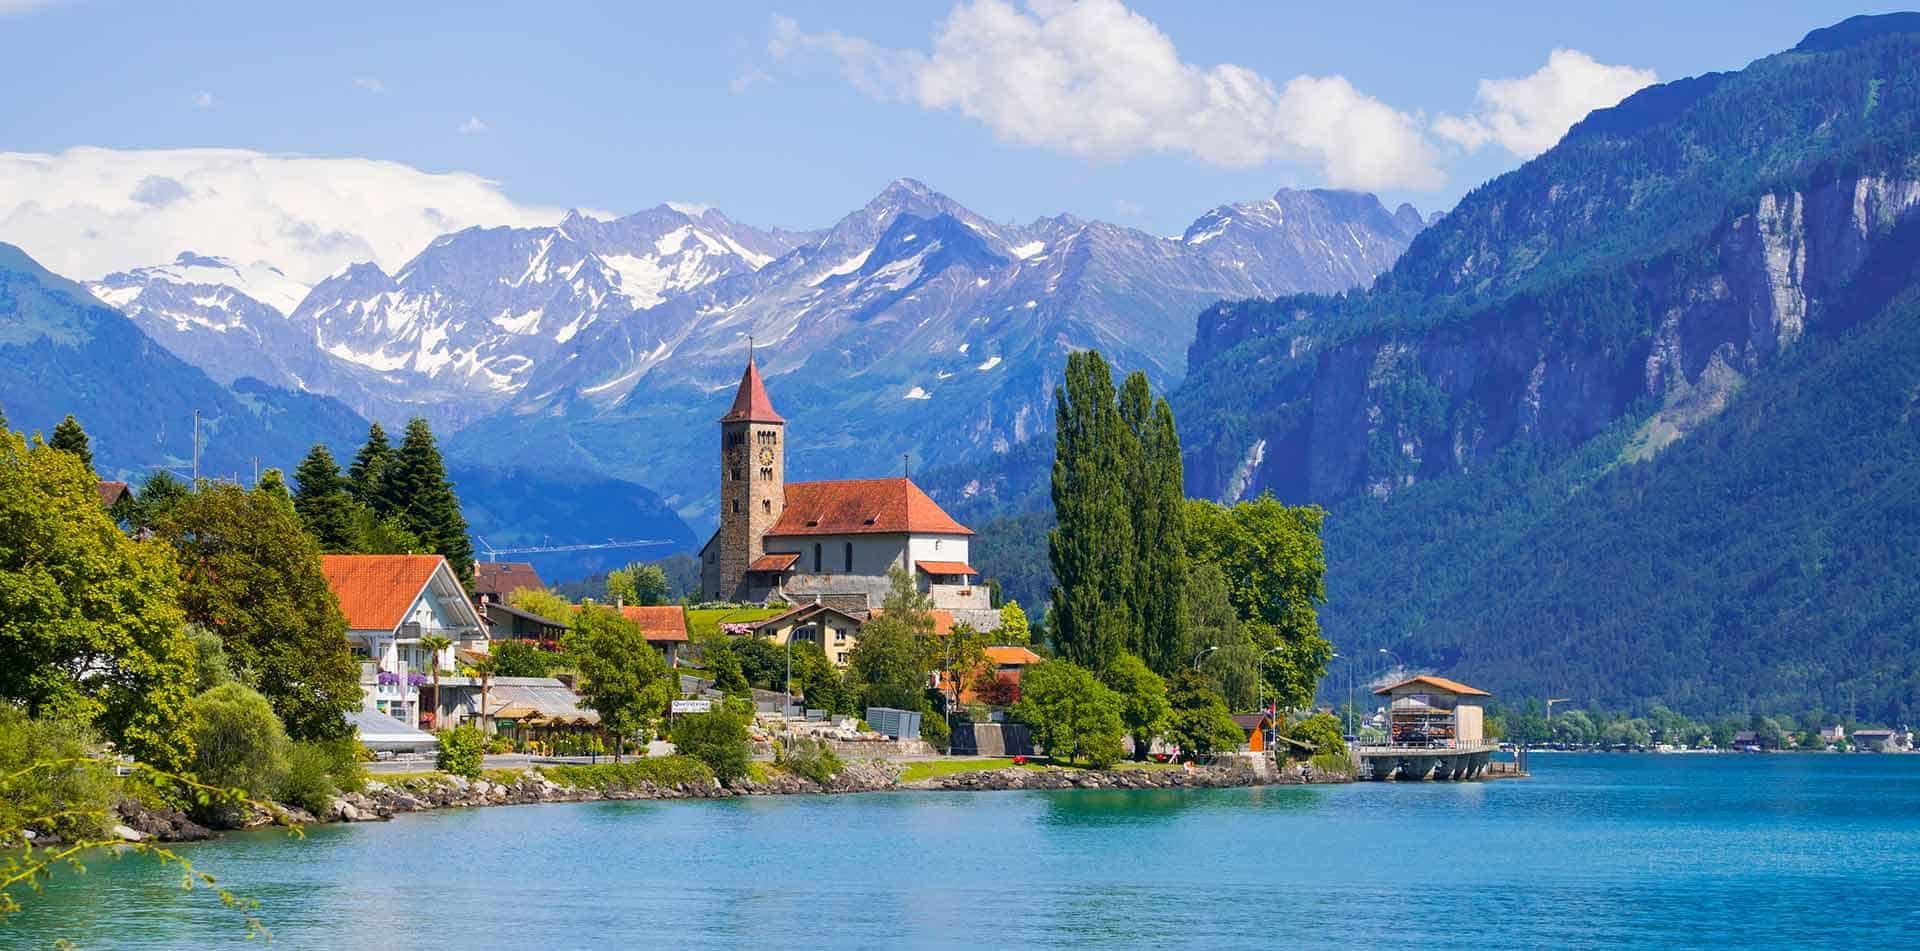 Mountain scenery and beautiful blue lake in Switzerland